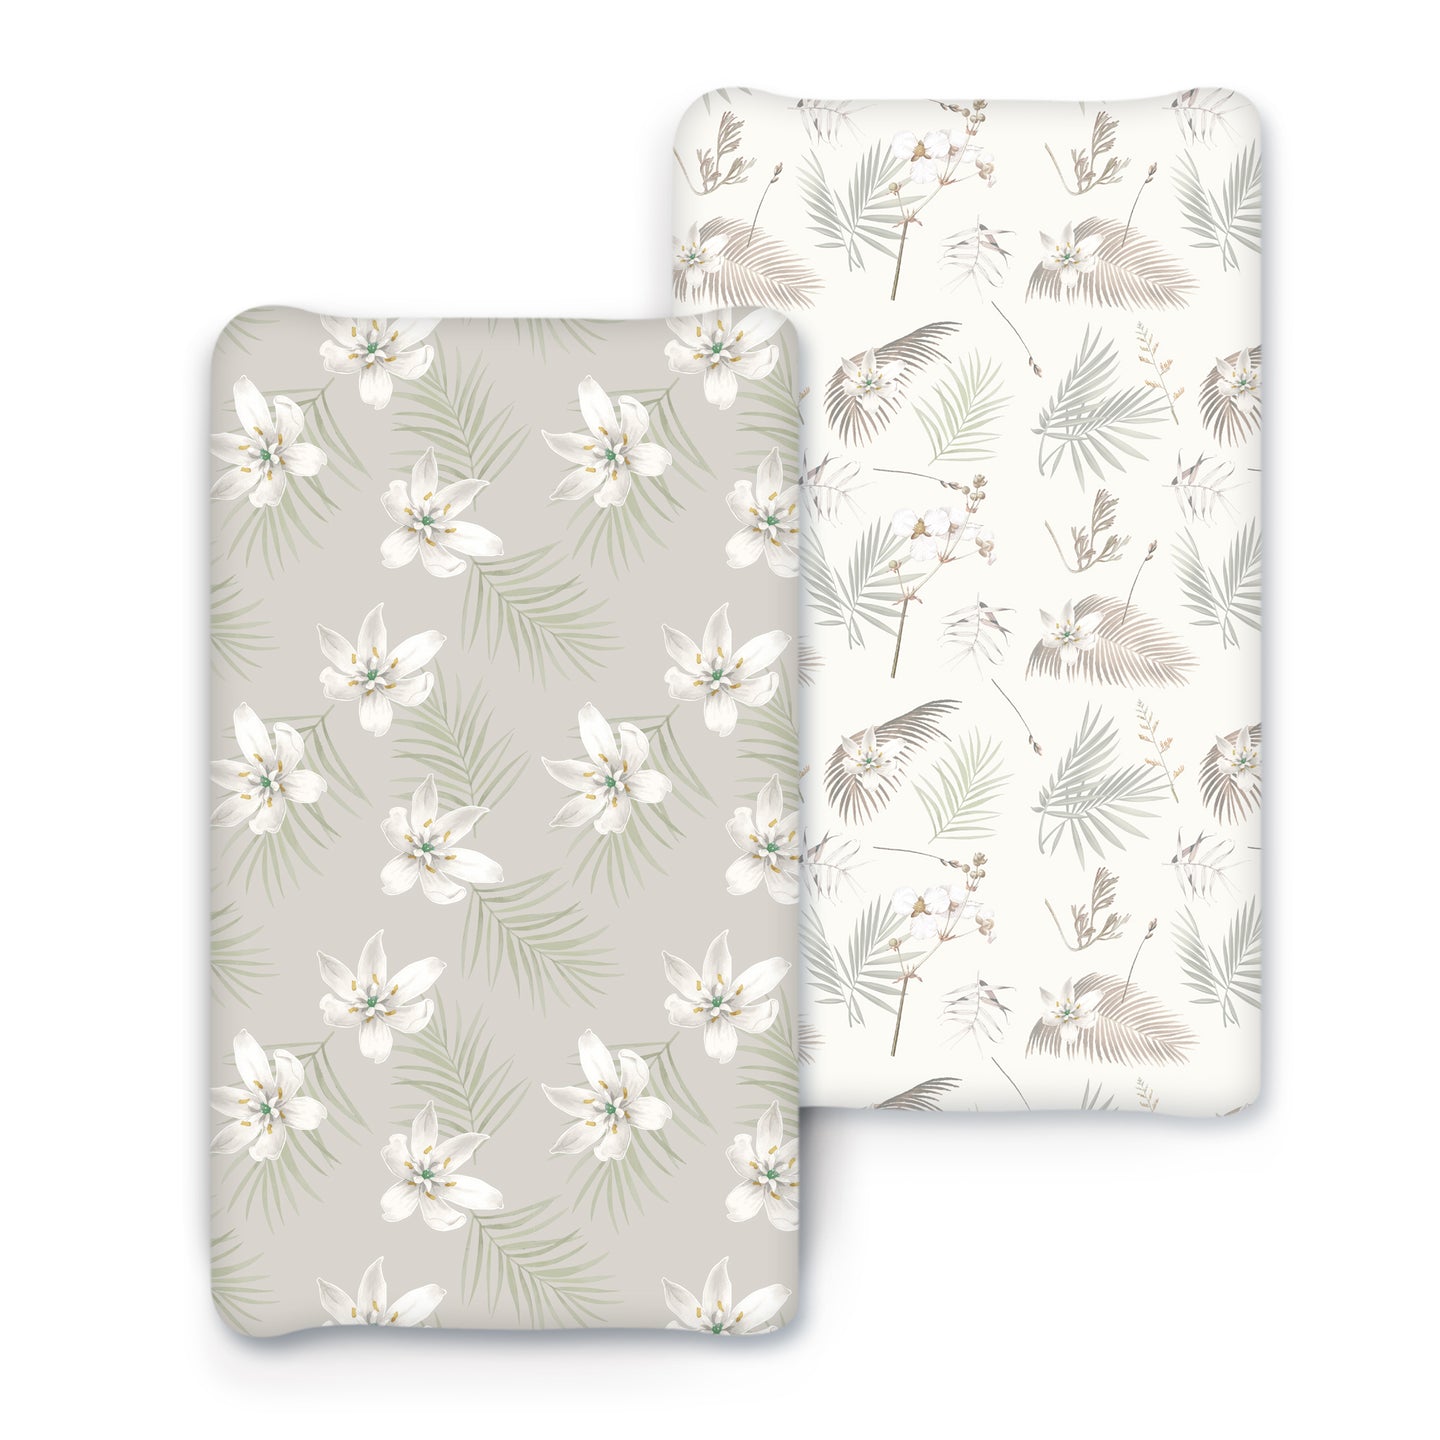 Acrabros Snug Fitted Changing Pad Cover Set Gardenia Blossom